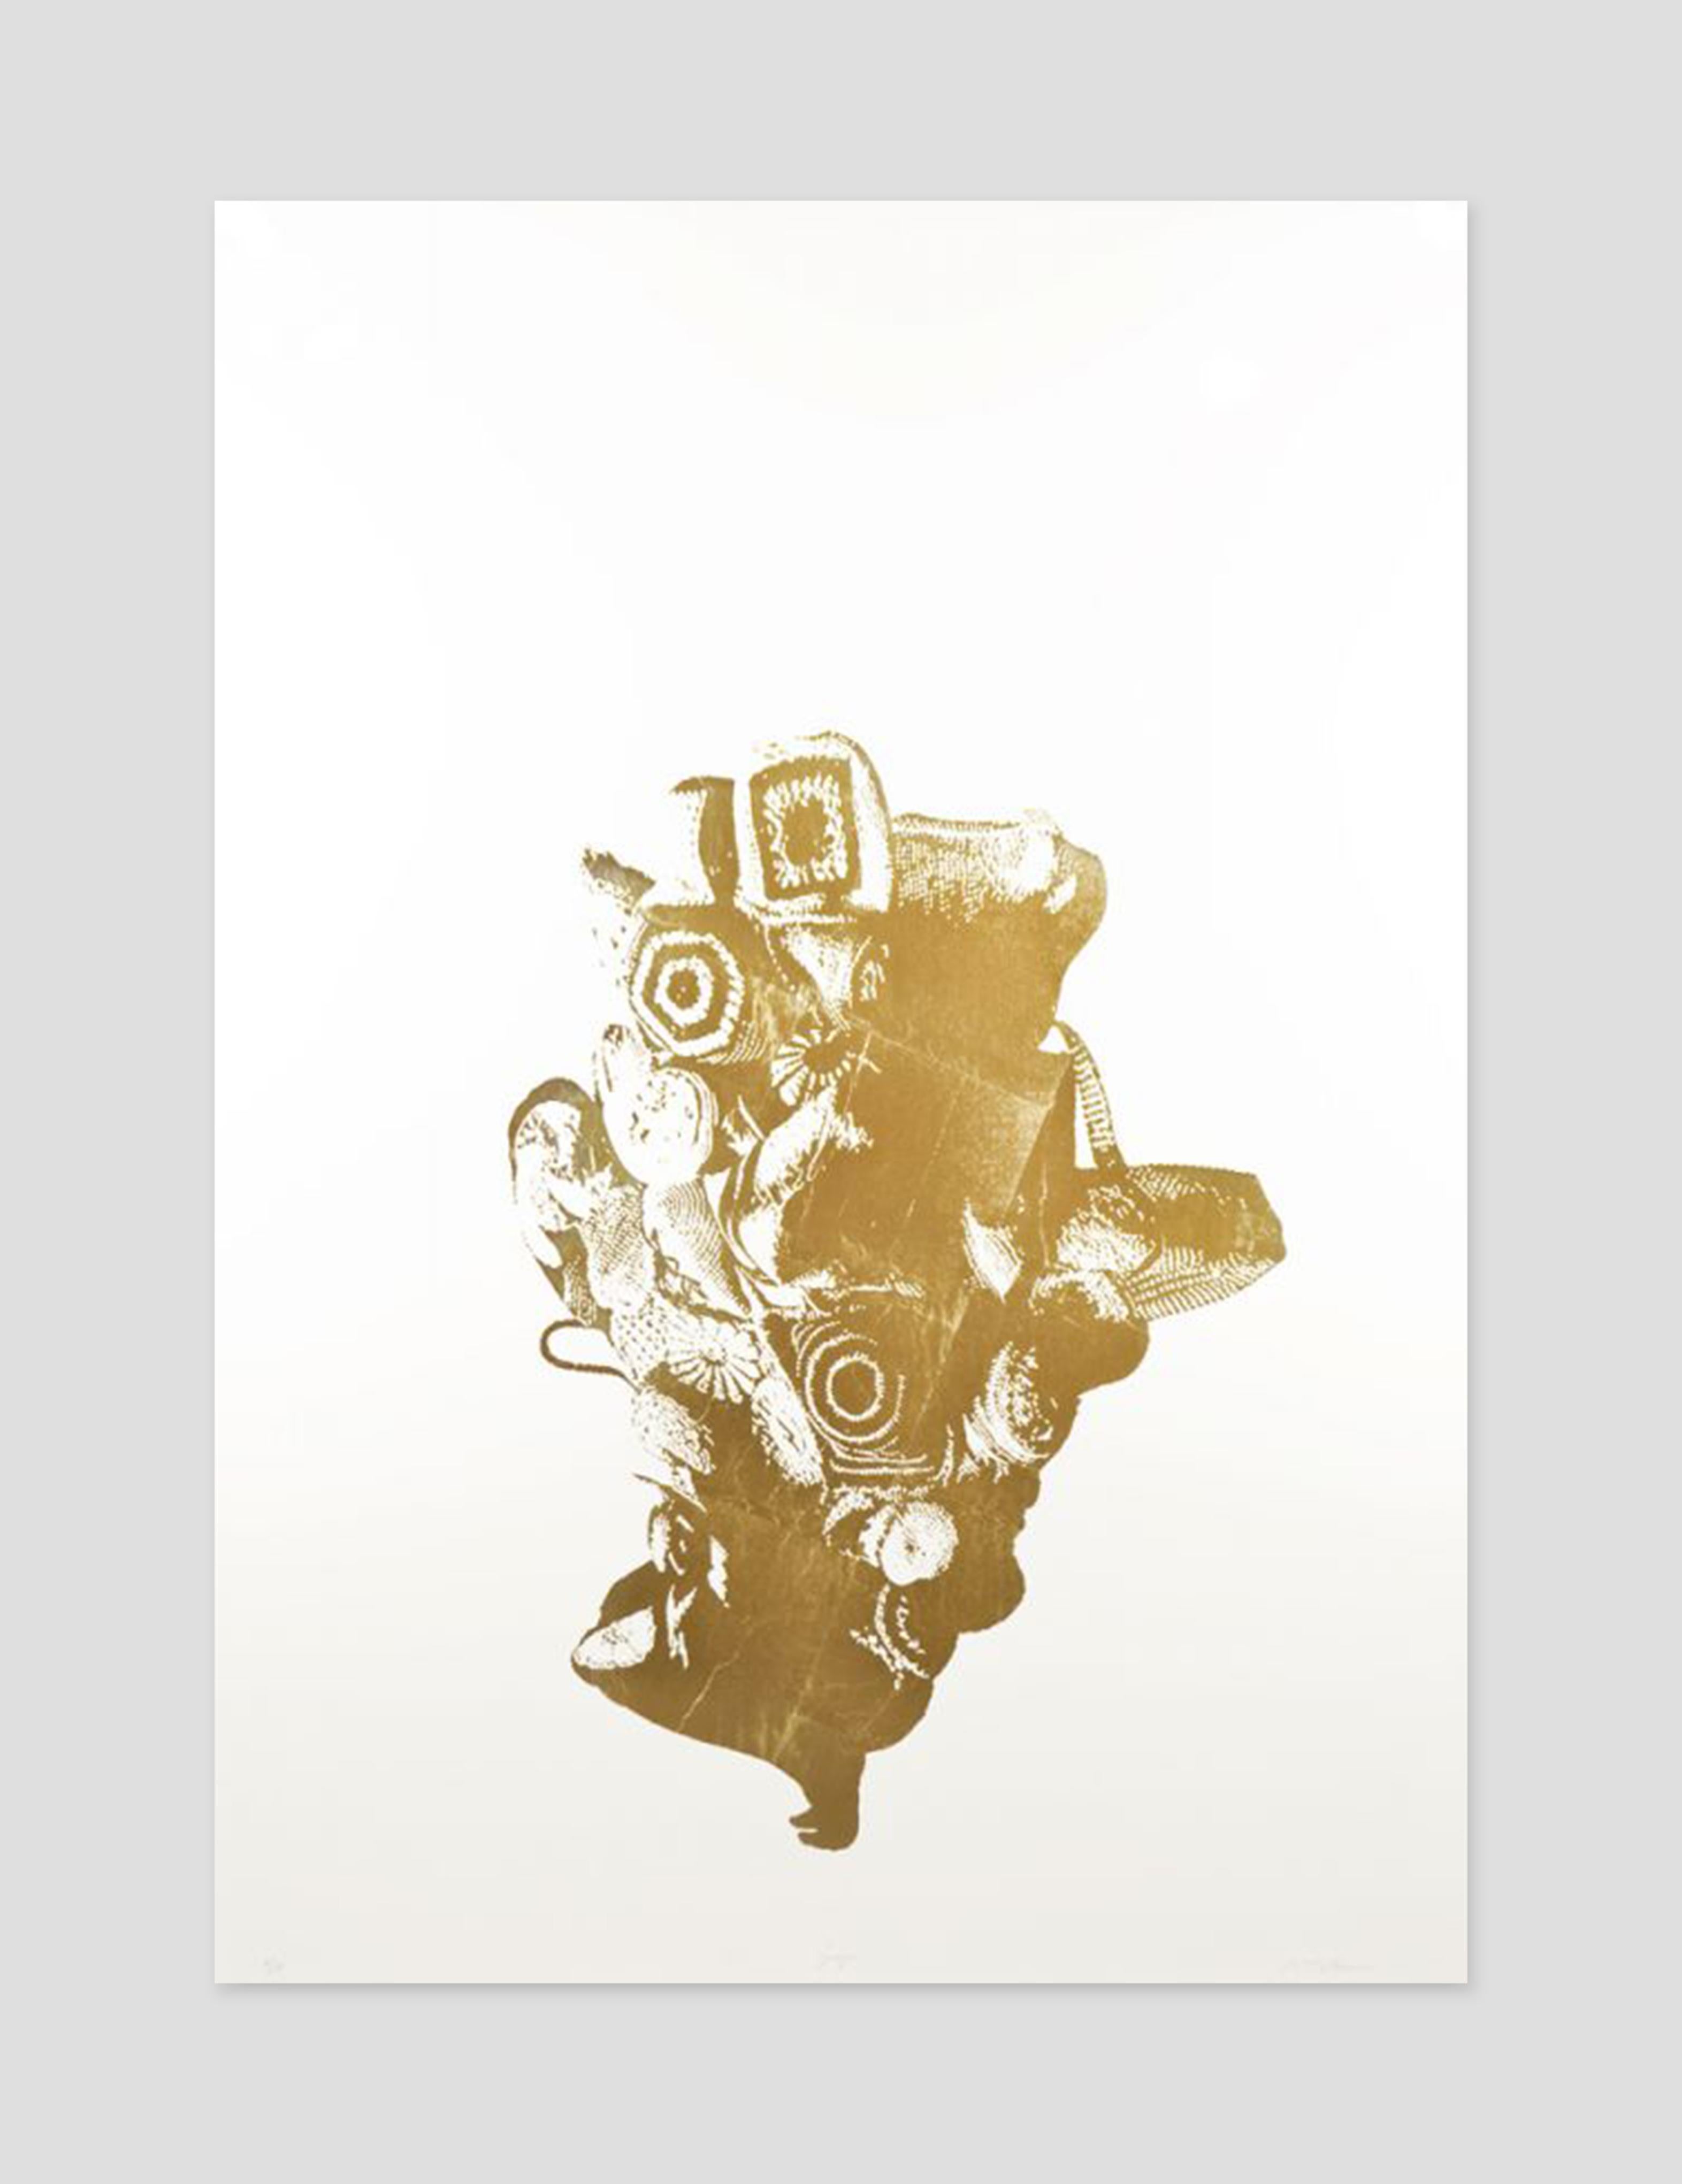 Nick Cave Abstract Print - Juju